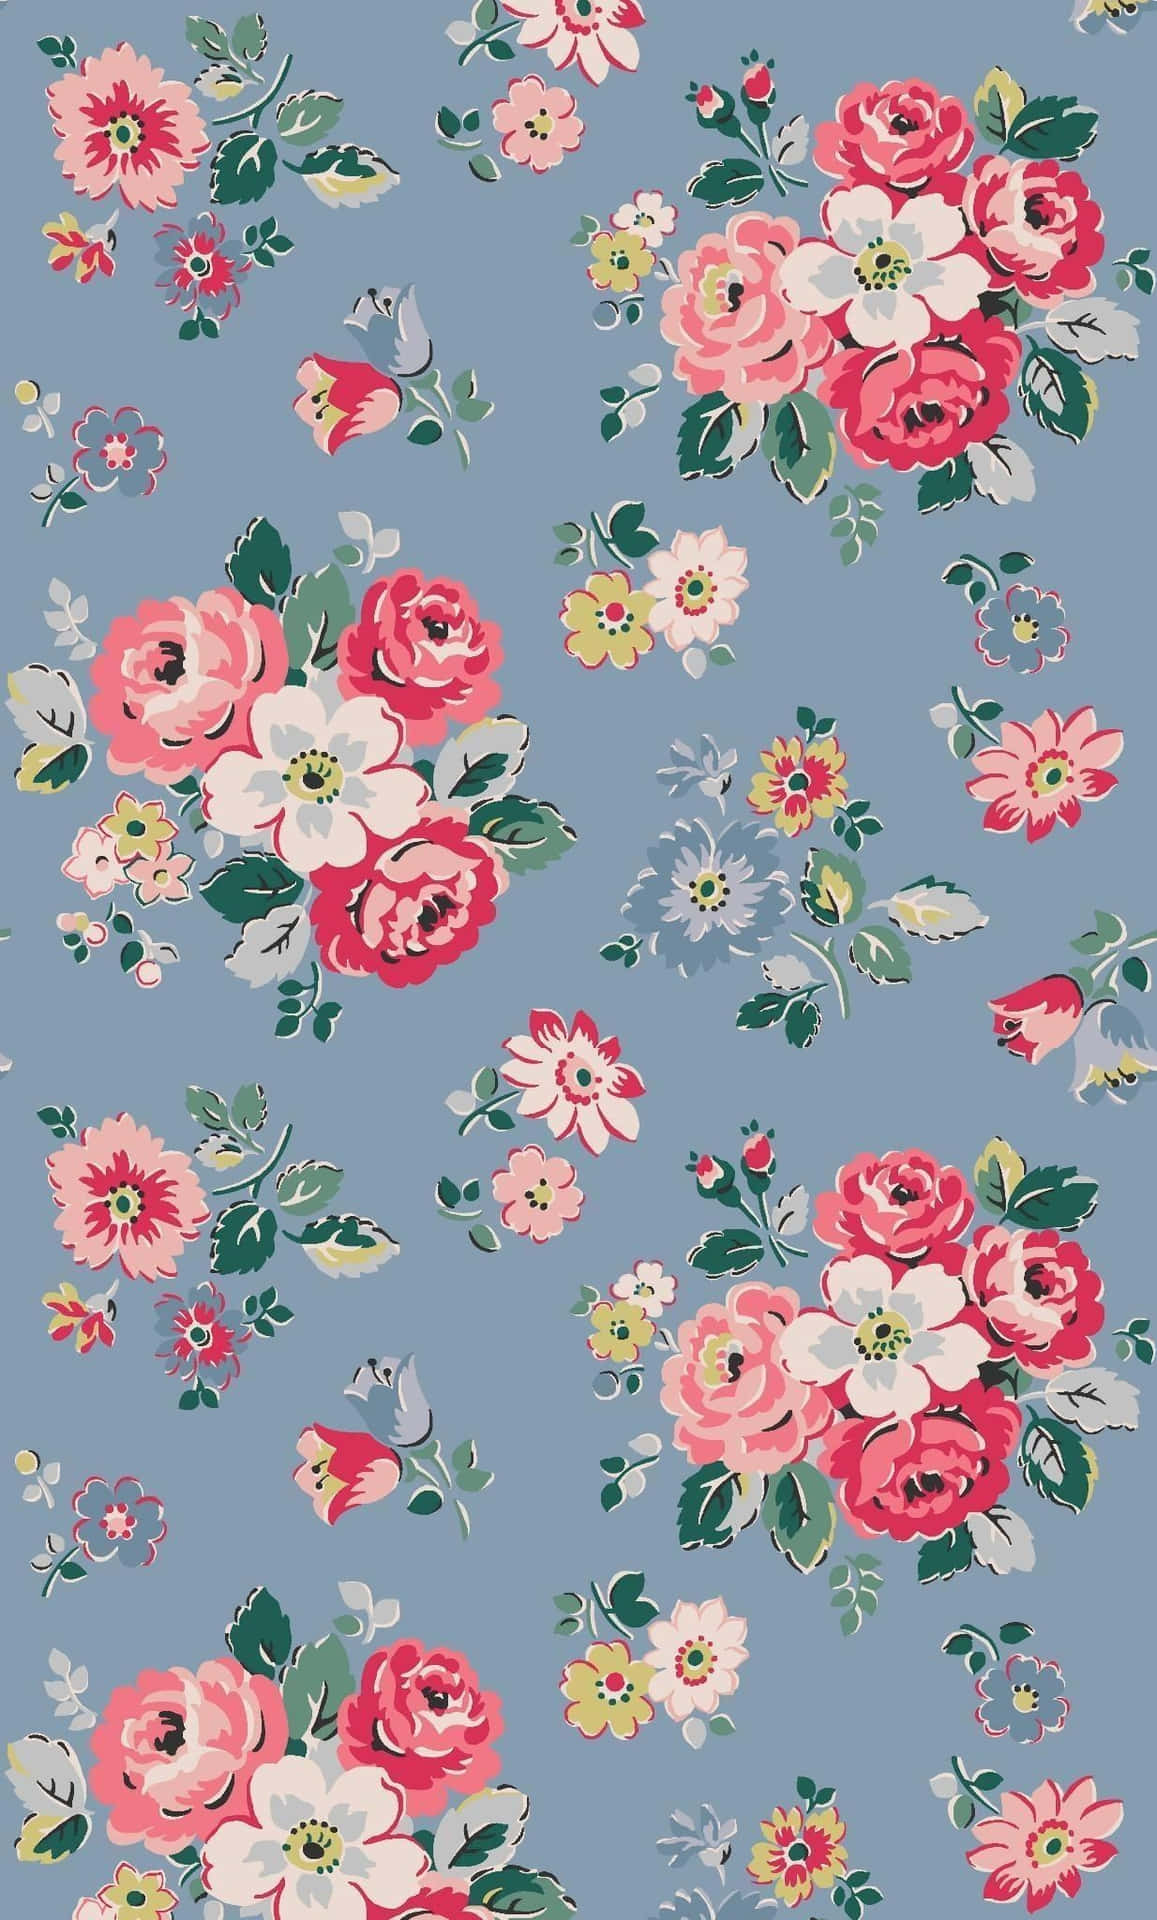 Colorful vintage floral wallpaper